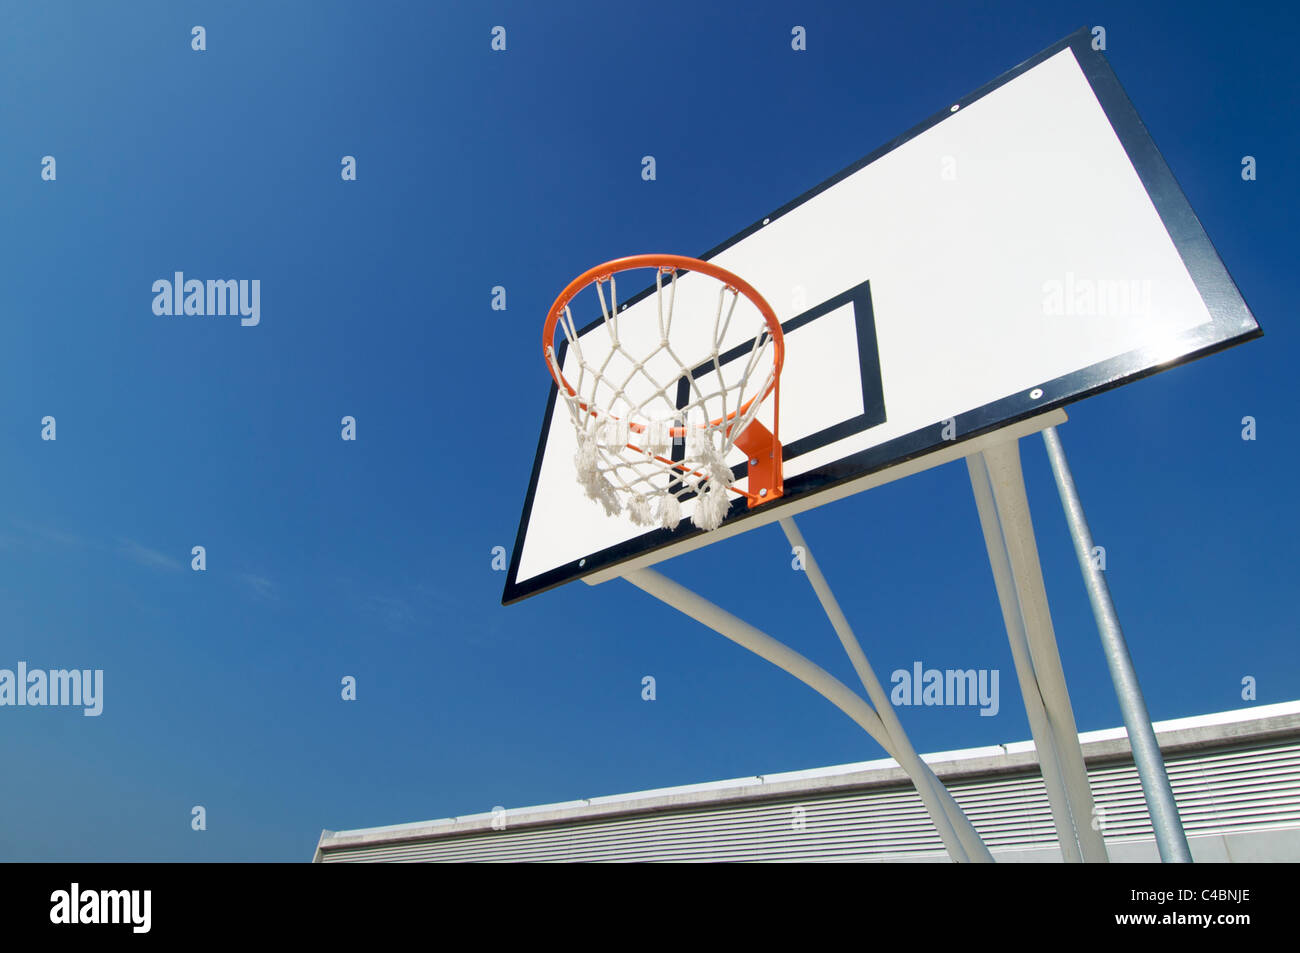 hoop shoot basketball game instructions